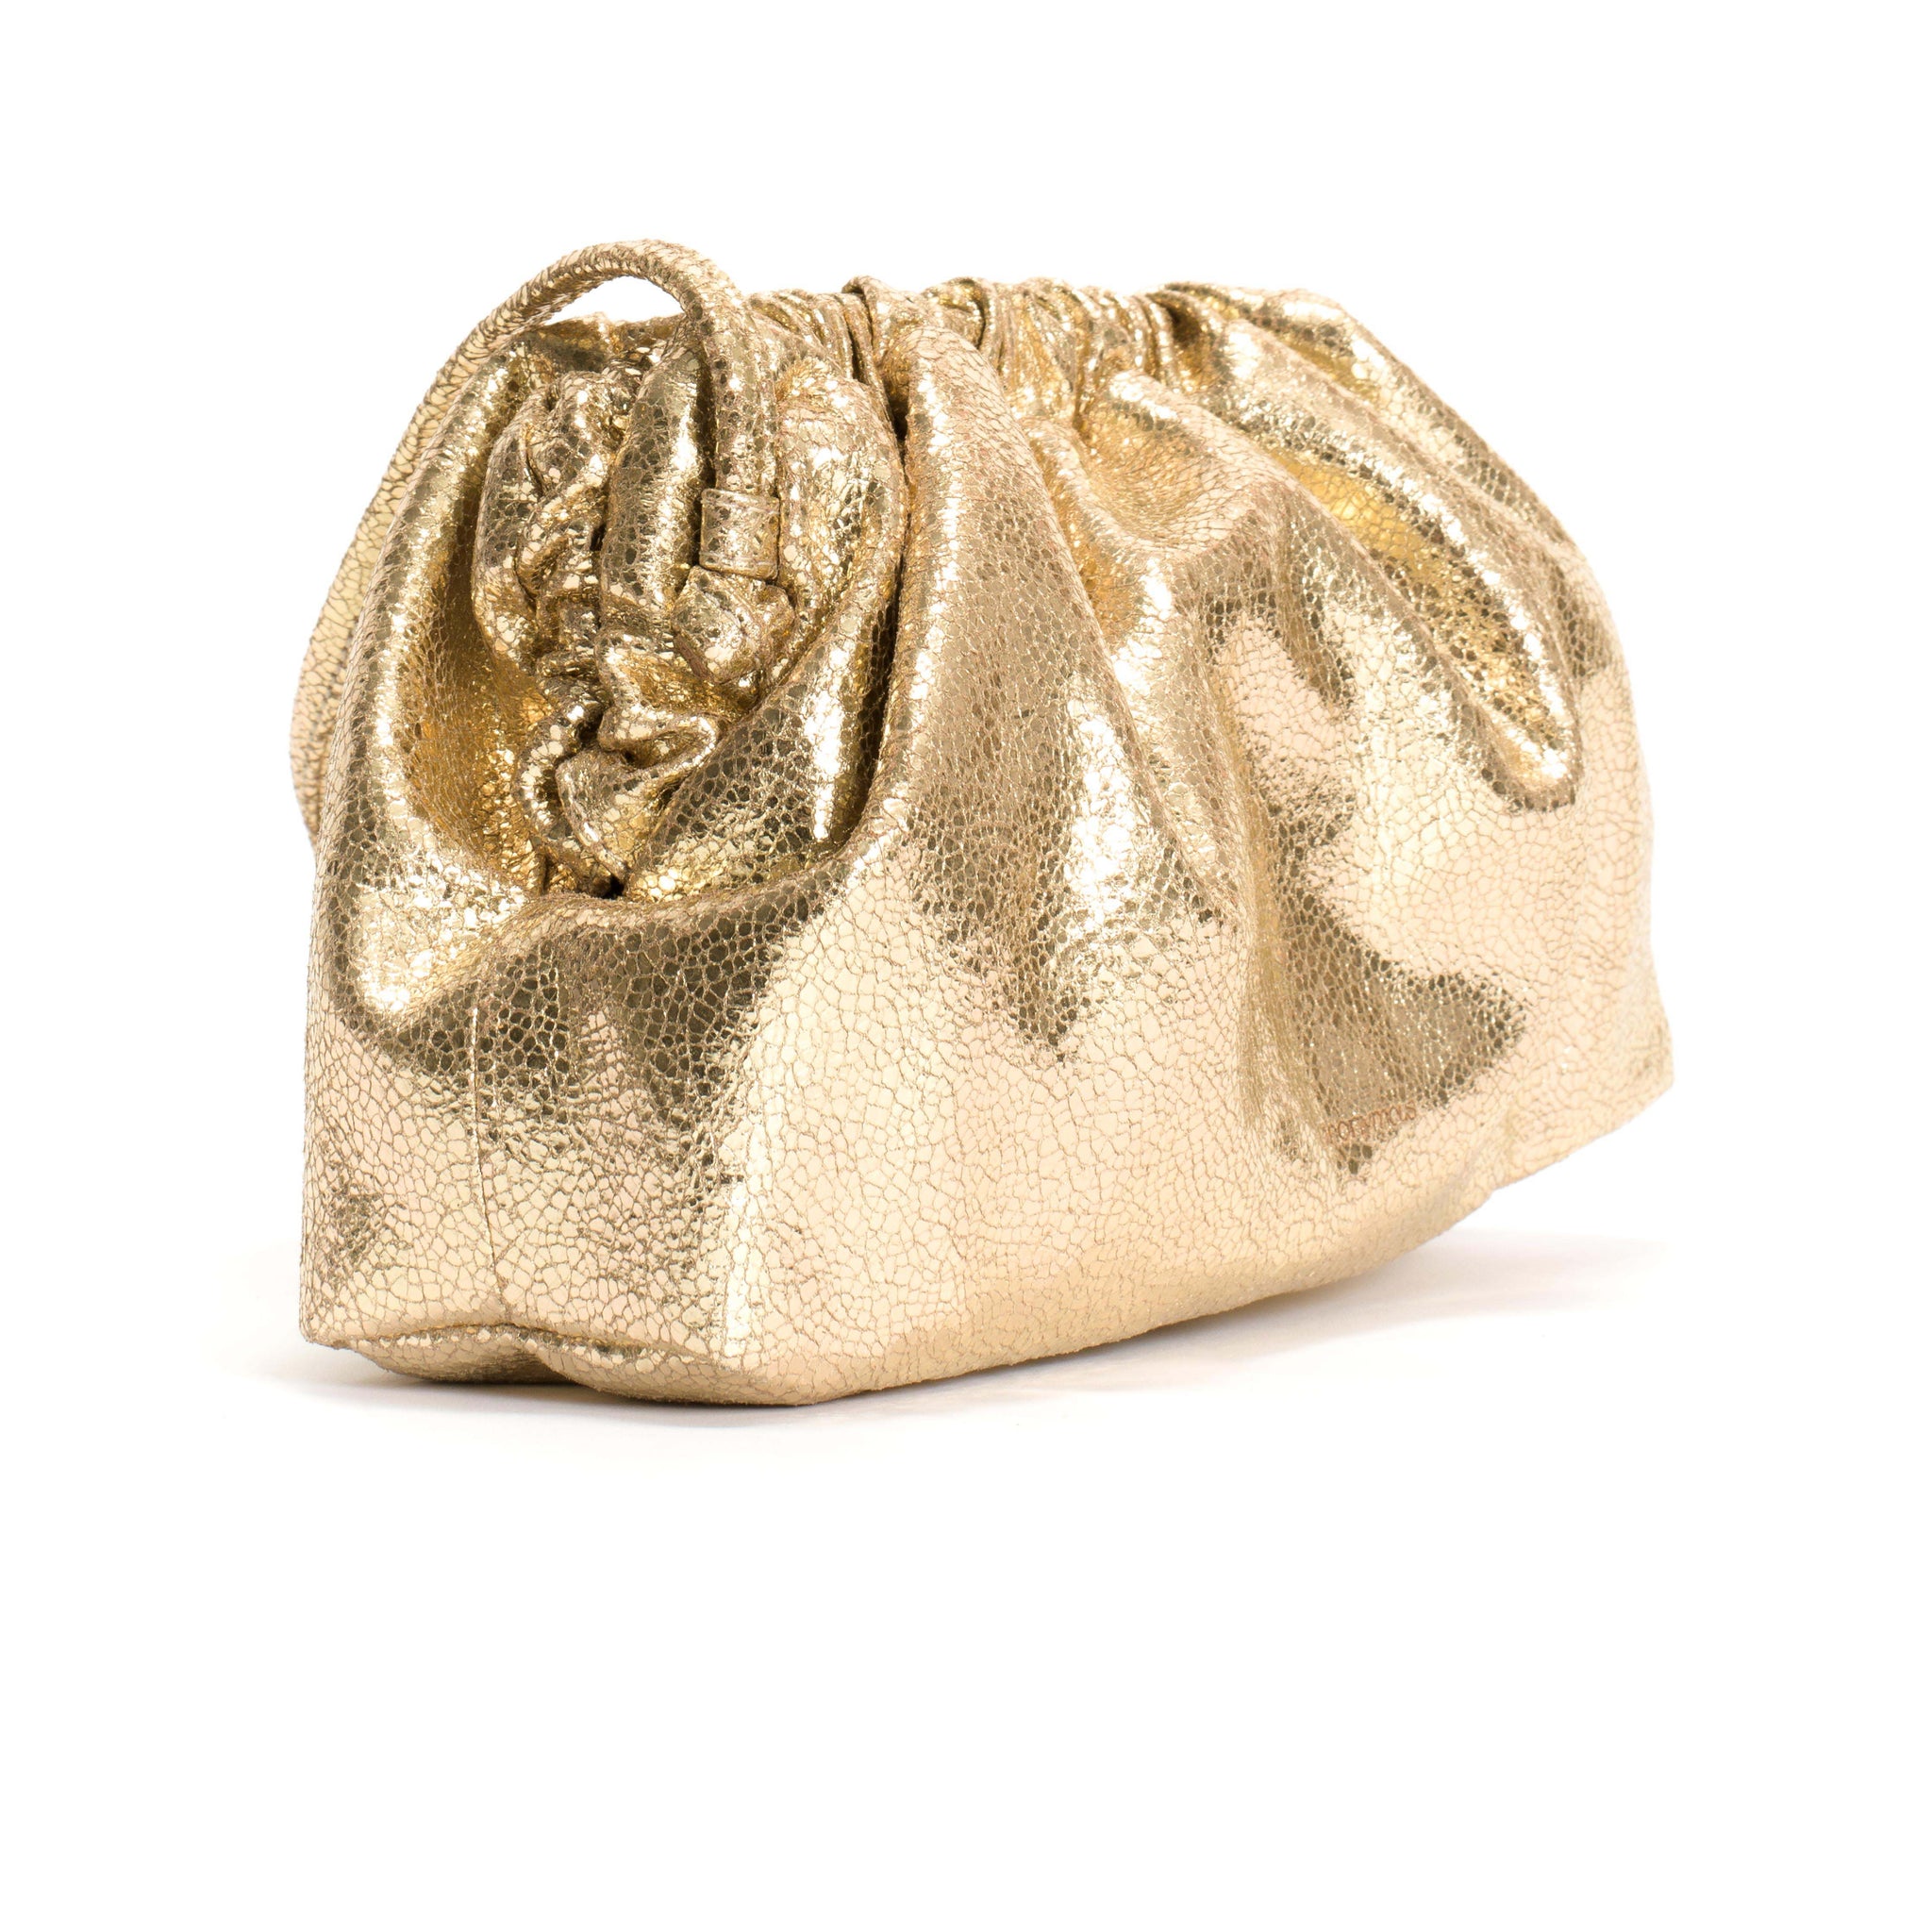 Hally petite cloud bag Crackled metallic goat Gold - Anonymous Copenhagen